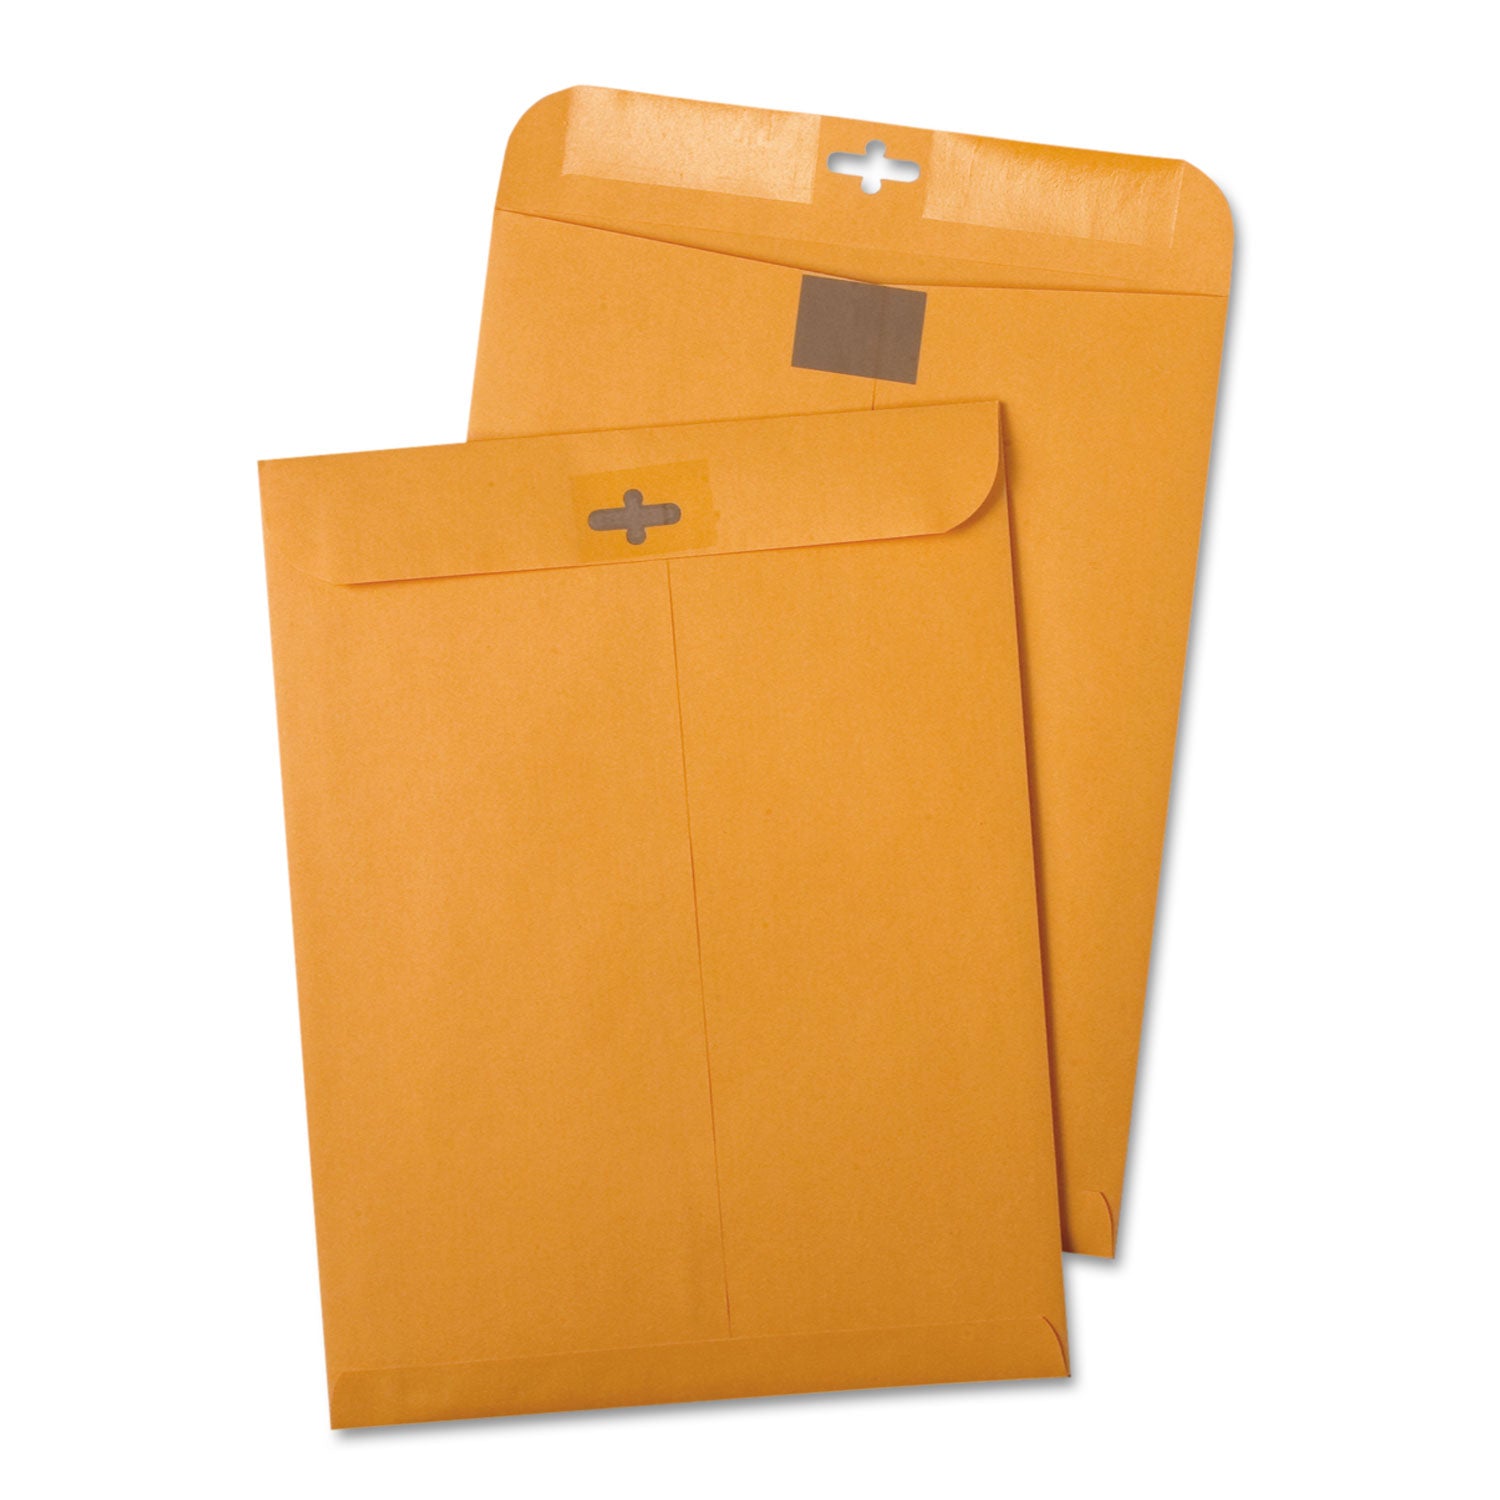 Postage Saving ClearClasp Kraft Envelope, #55, Cheese Blade Flap, ClearClasp Closure, 6 x 9, Brown Kraft, 100/Box - 